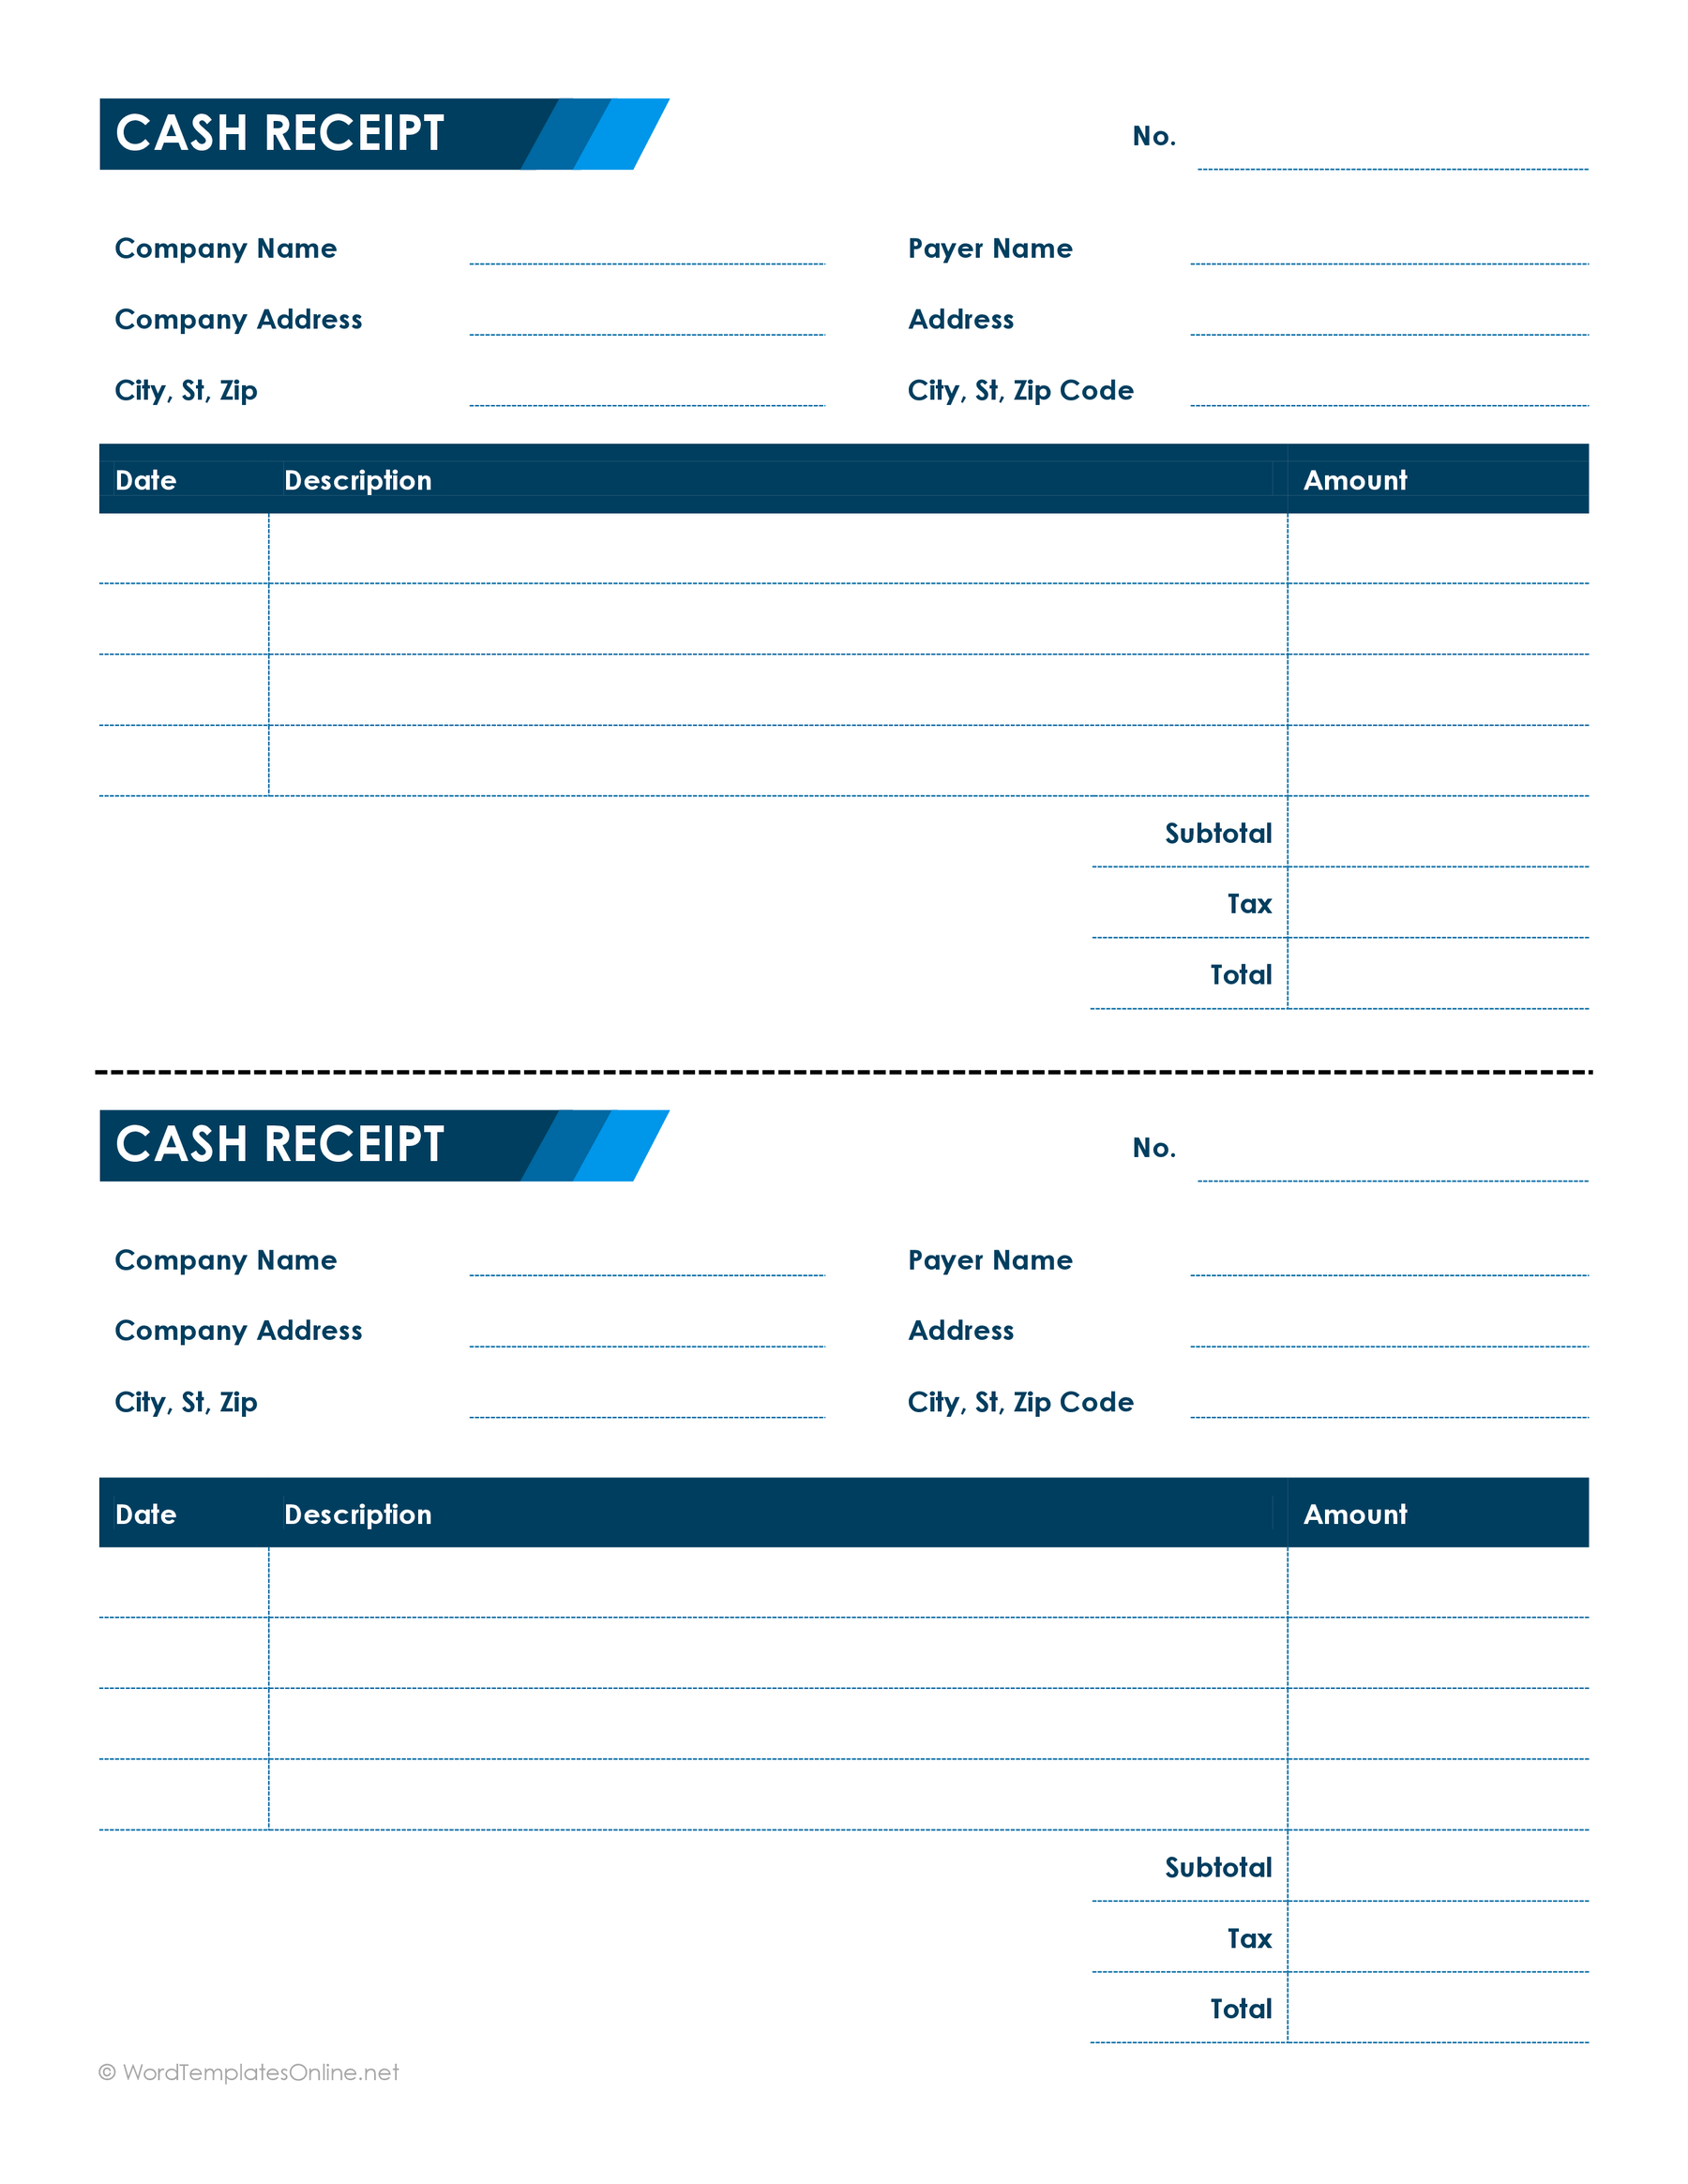 Fillable cash receipt template